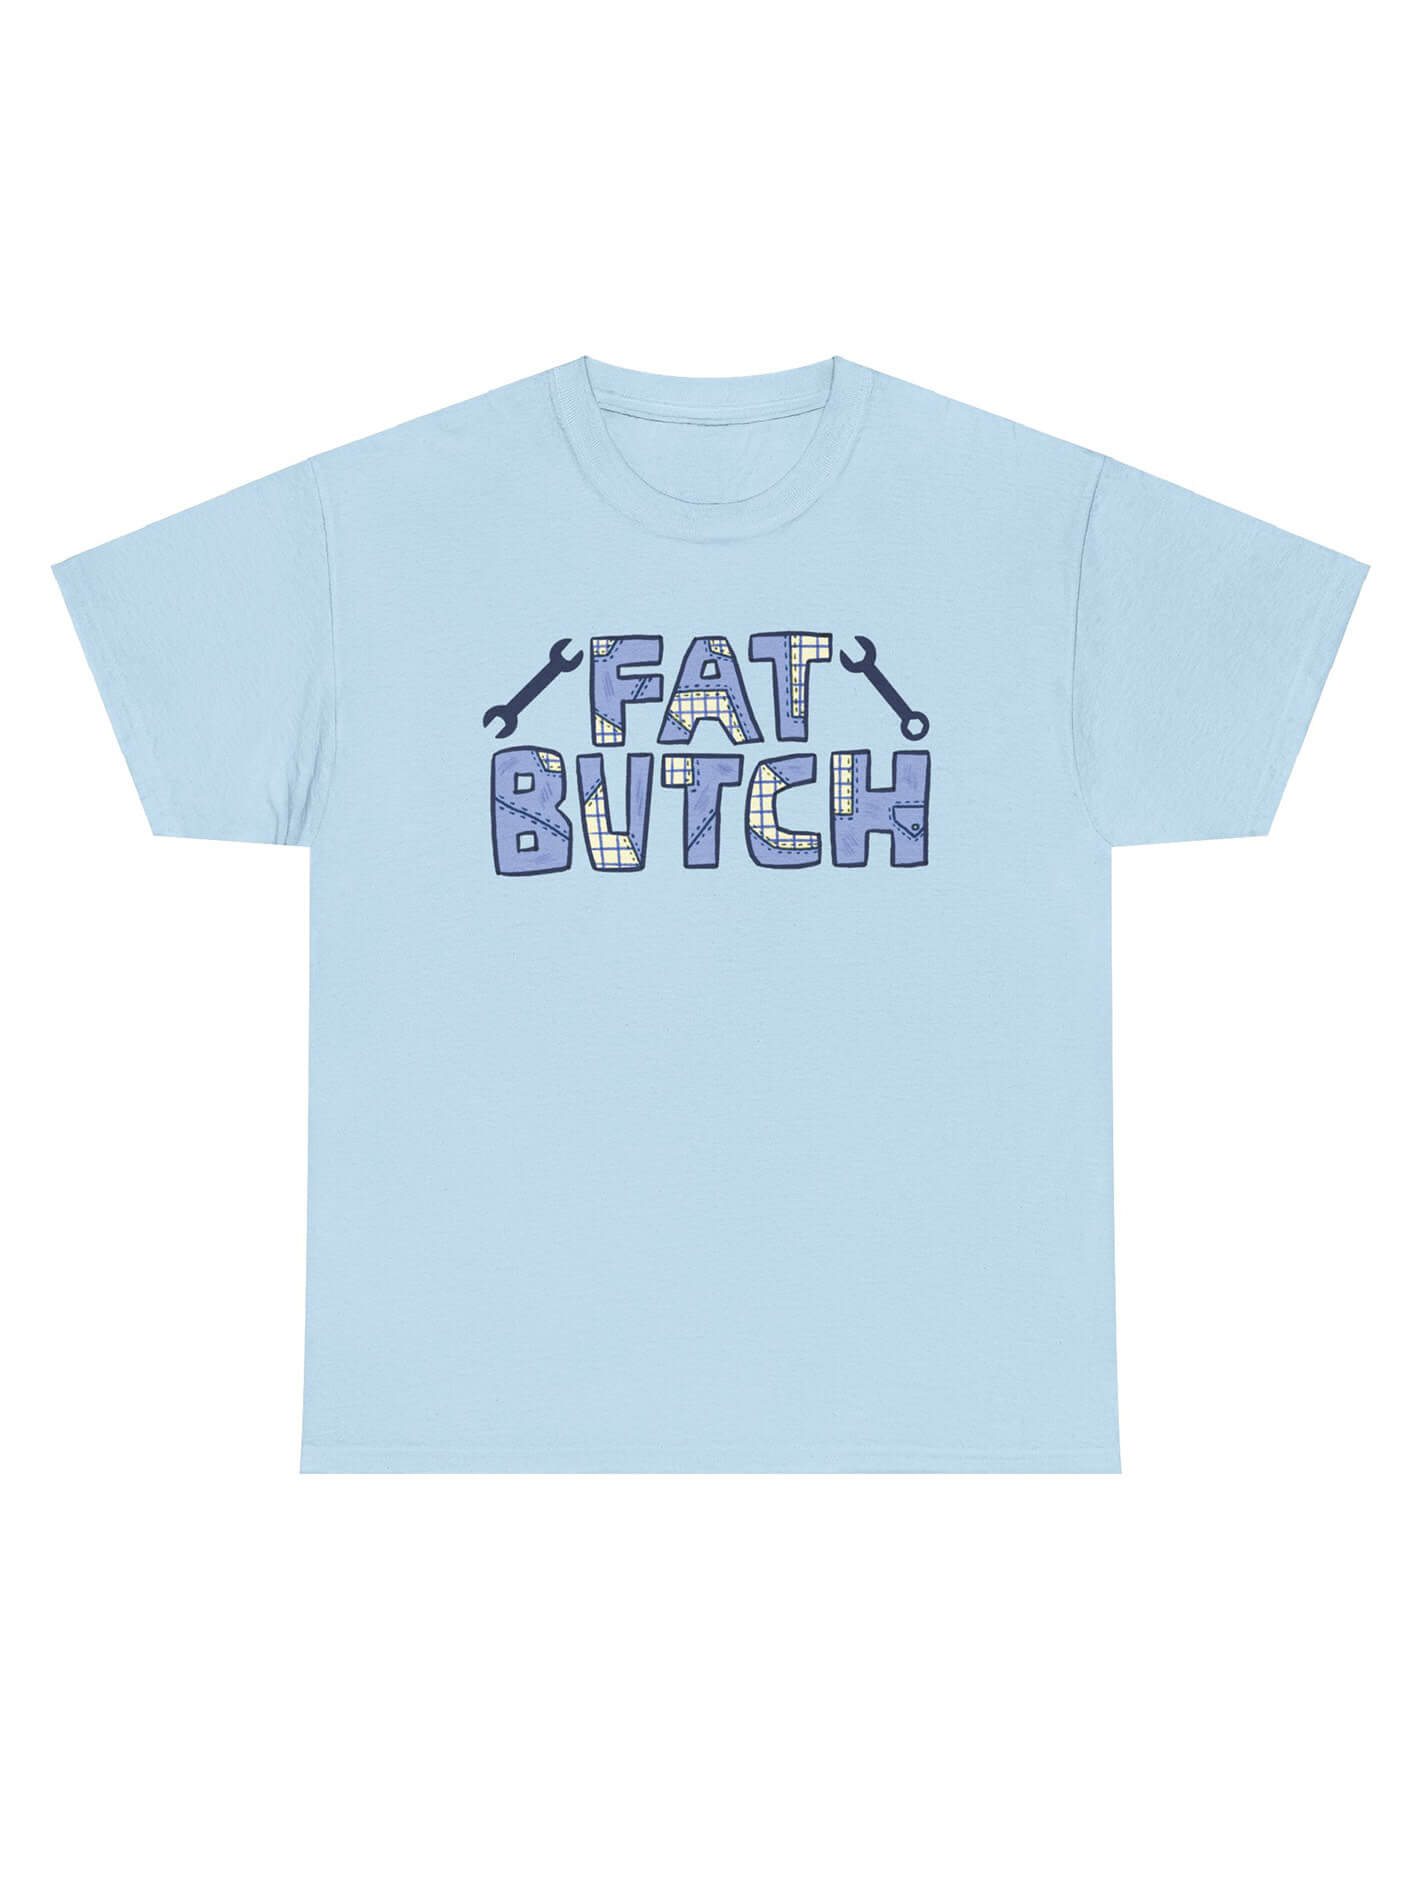 Fat butch gay unisex t-shirt.